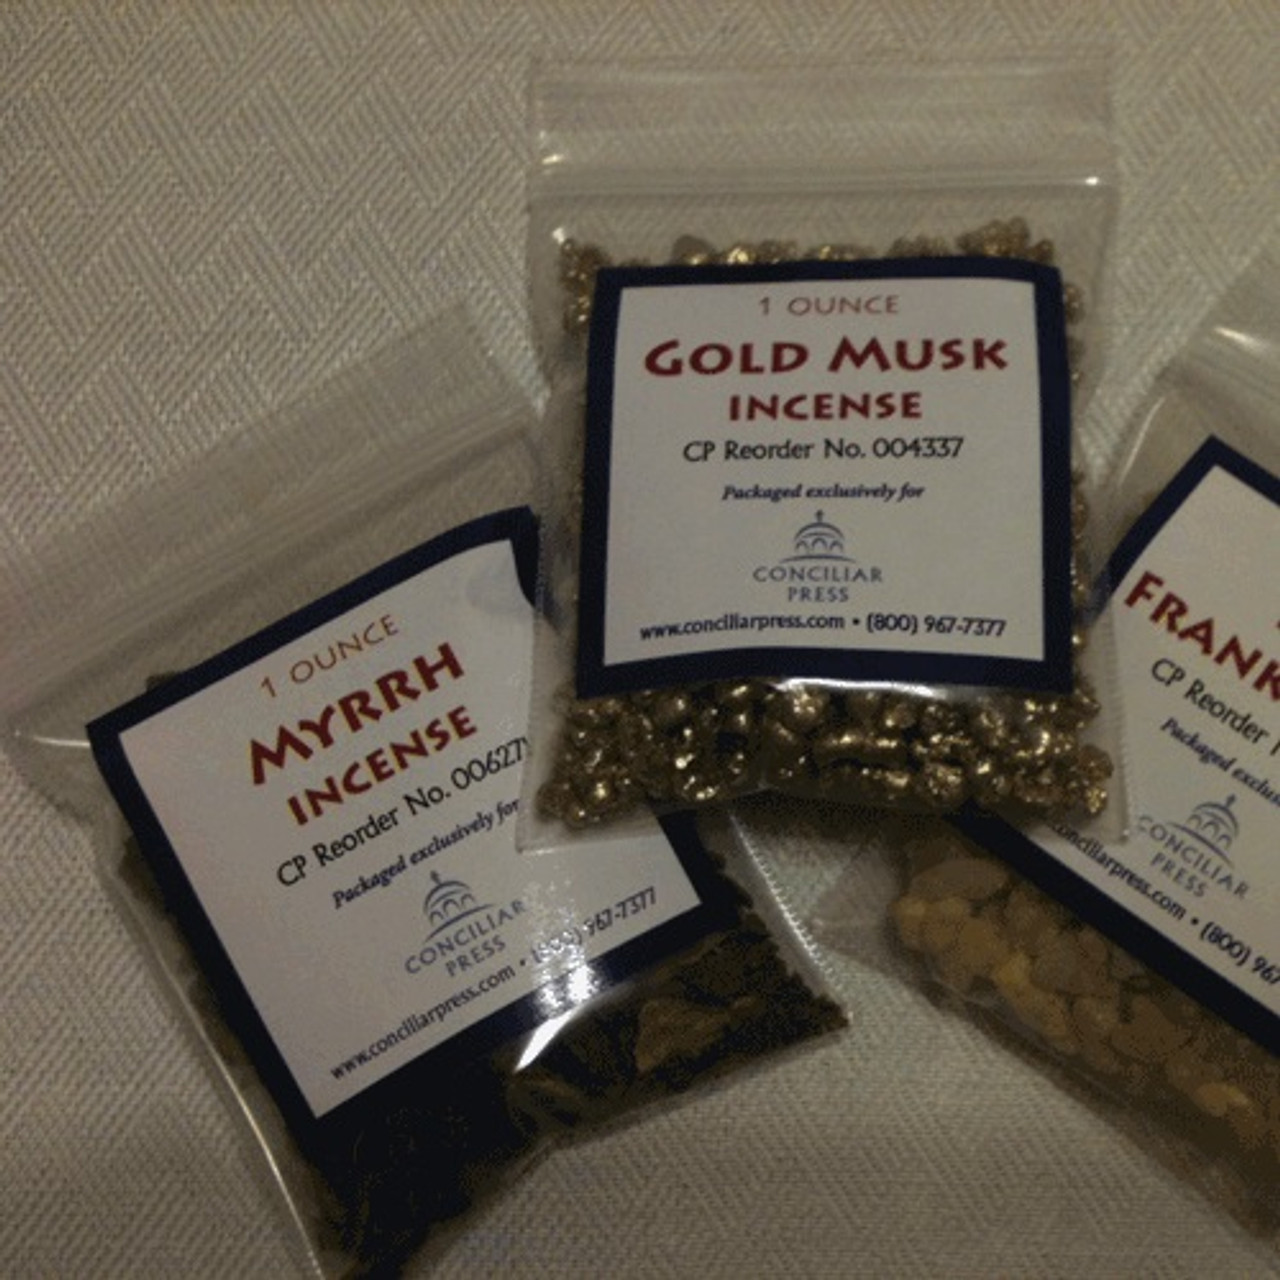 Frankincense, Myrrh and Gold - 1 oz.